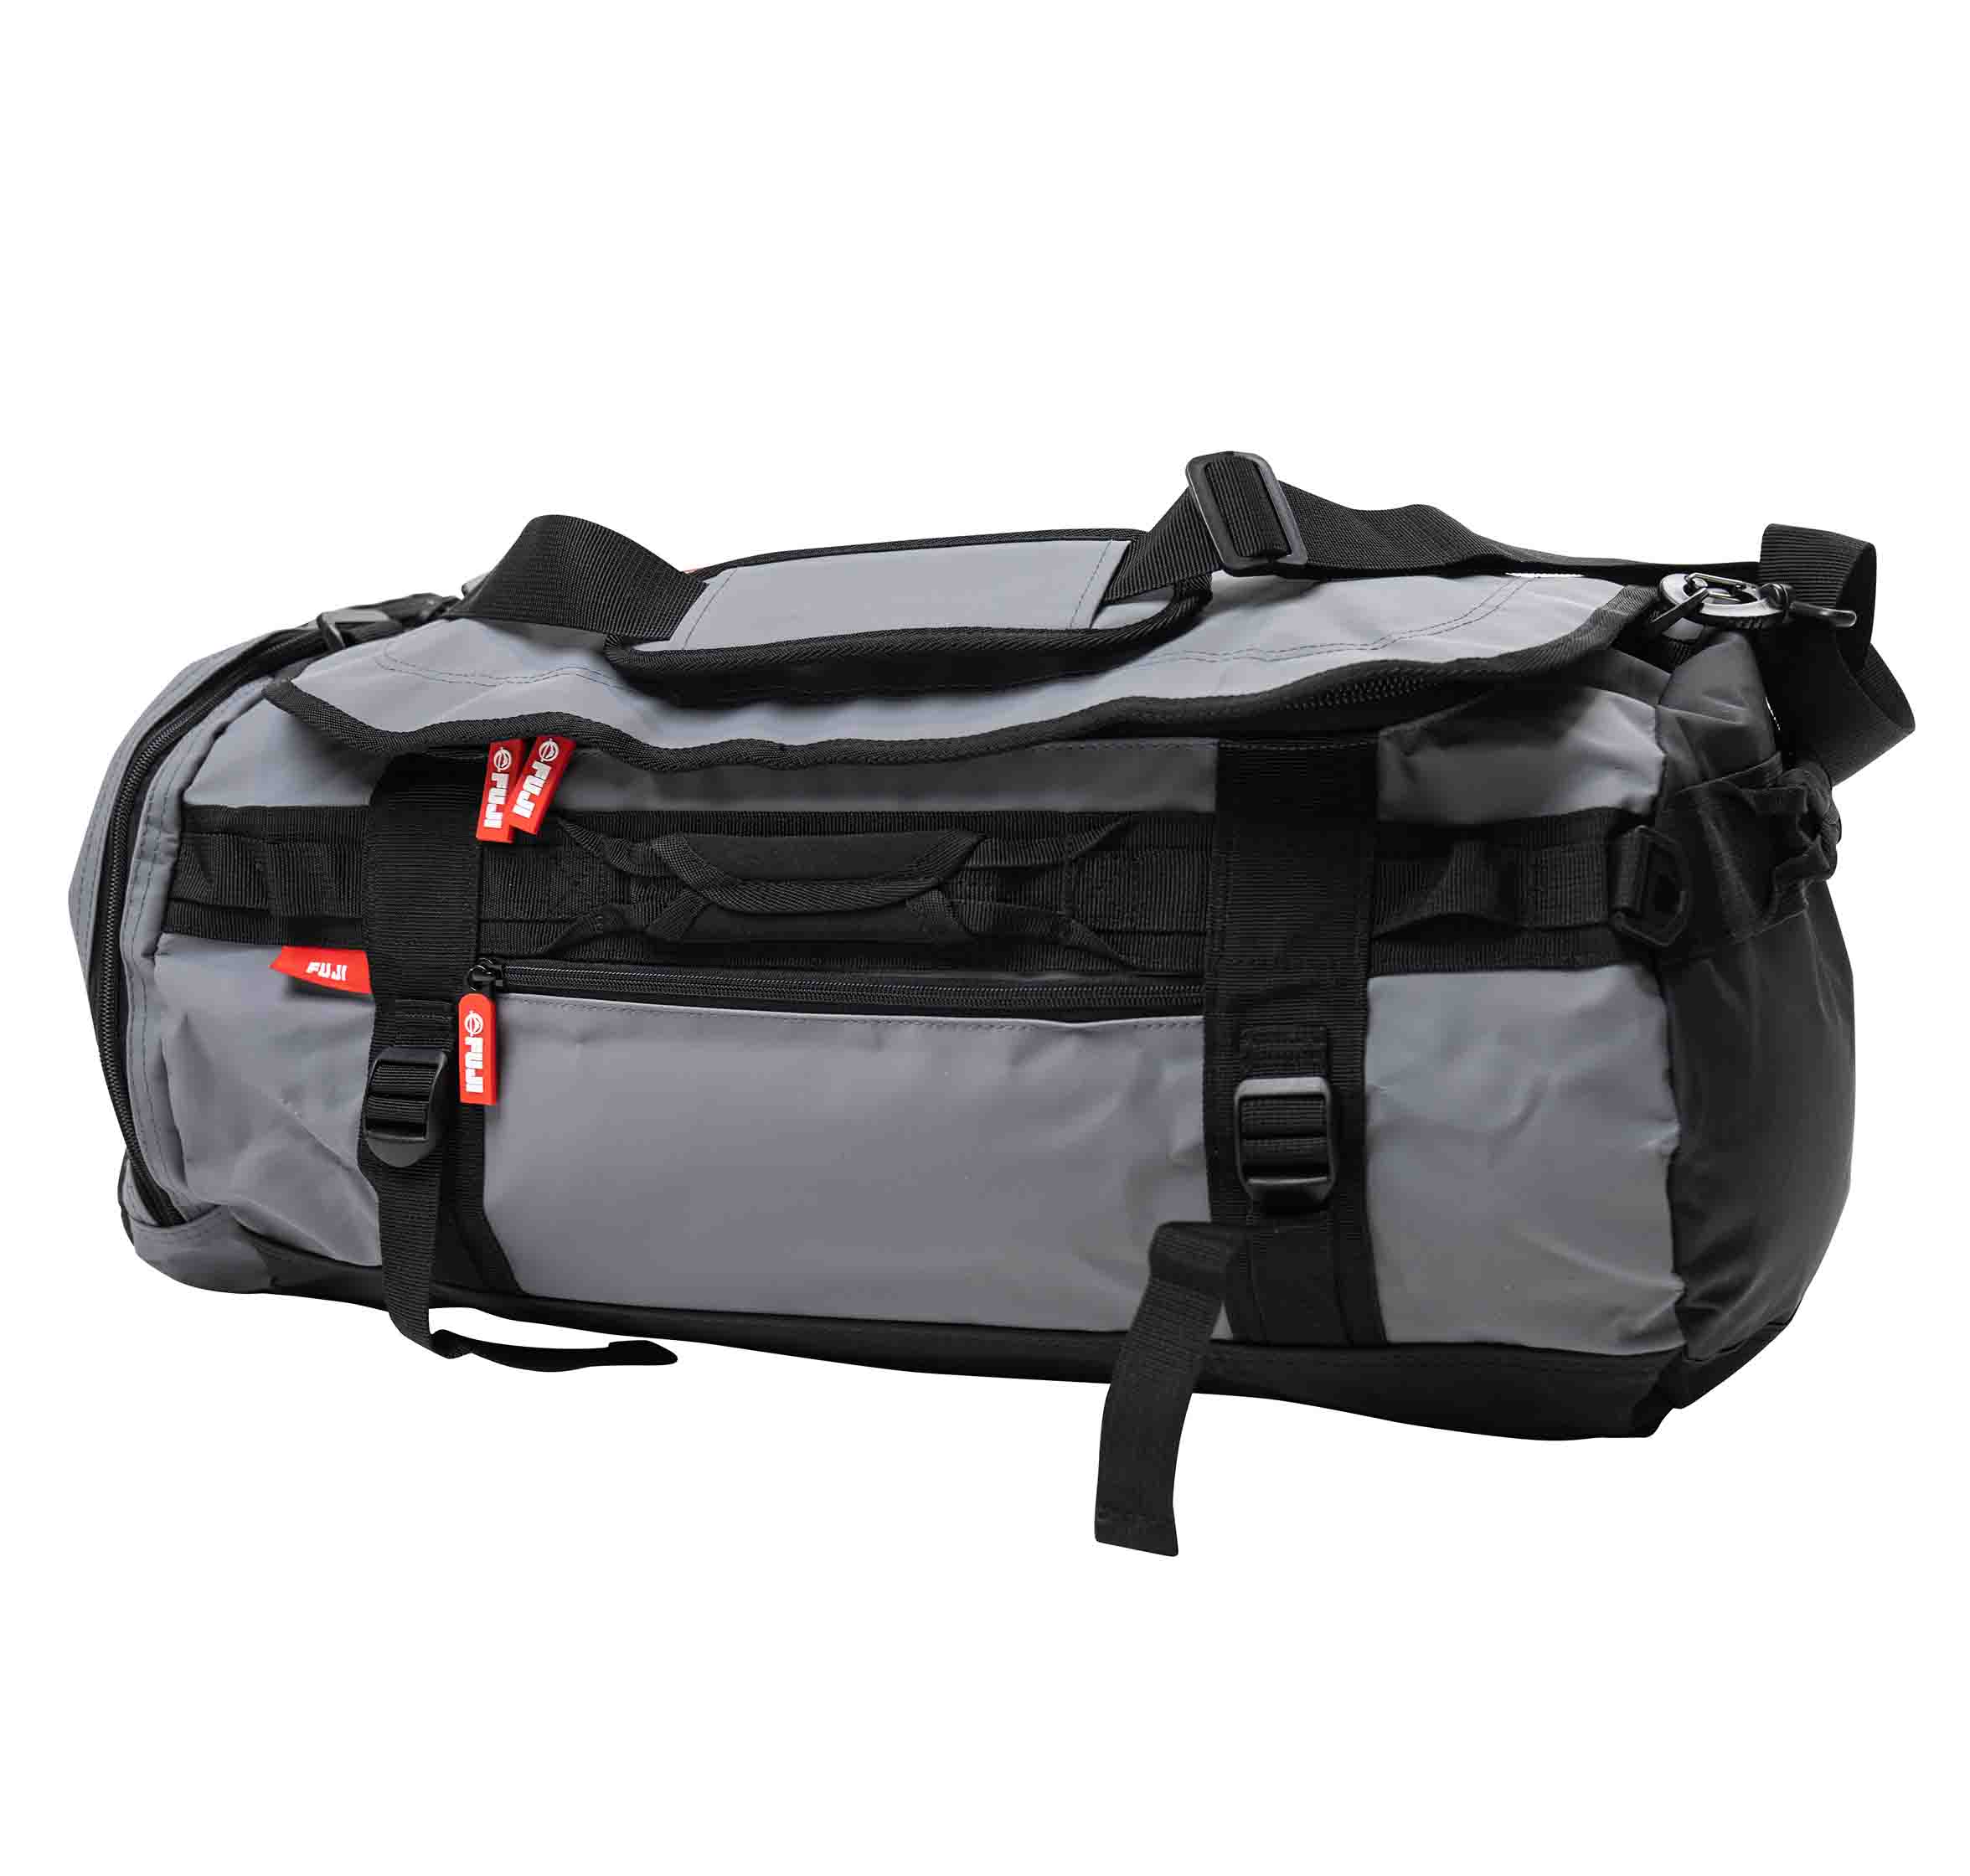 Comp Convertible Backpack Duffle Grey